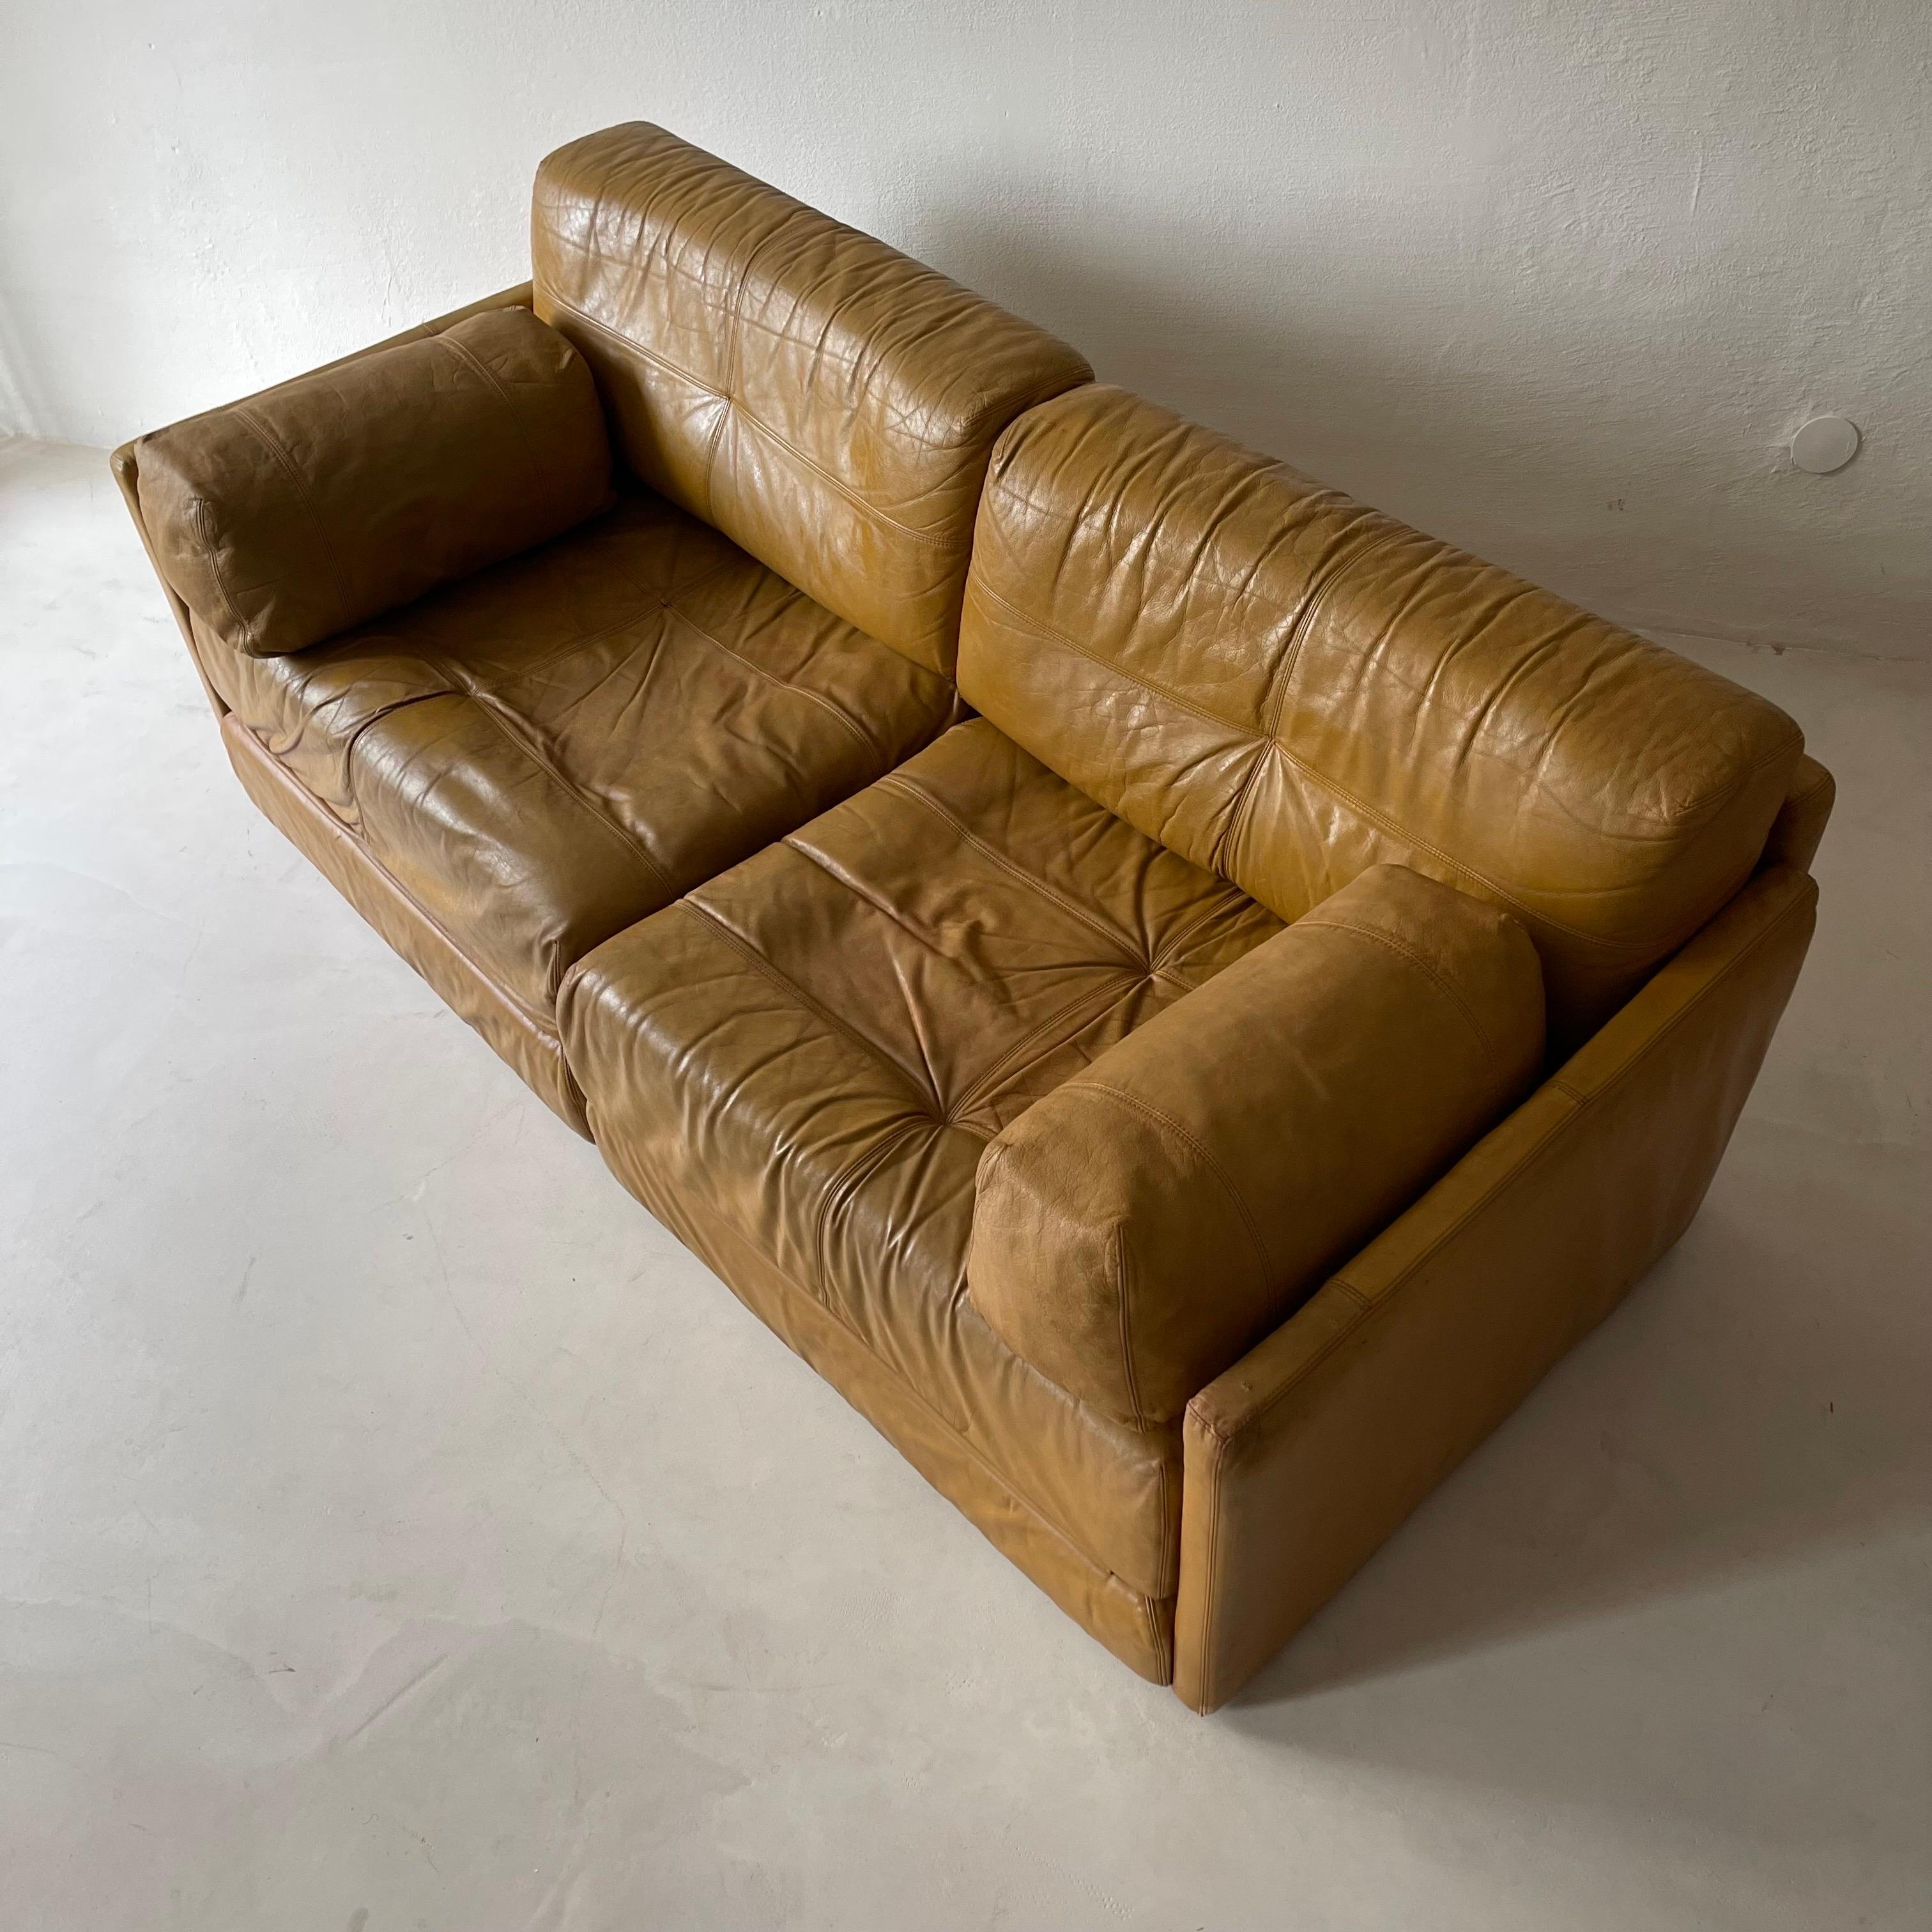 Wittmann 'Atrium' cognac leather daybed sofa, 1970s.